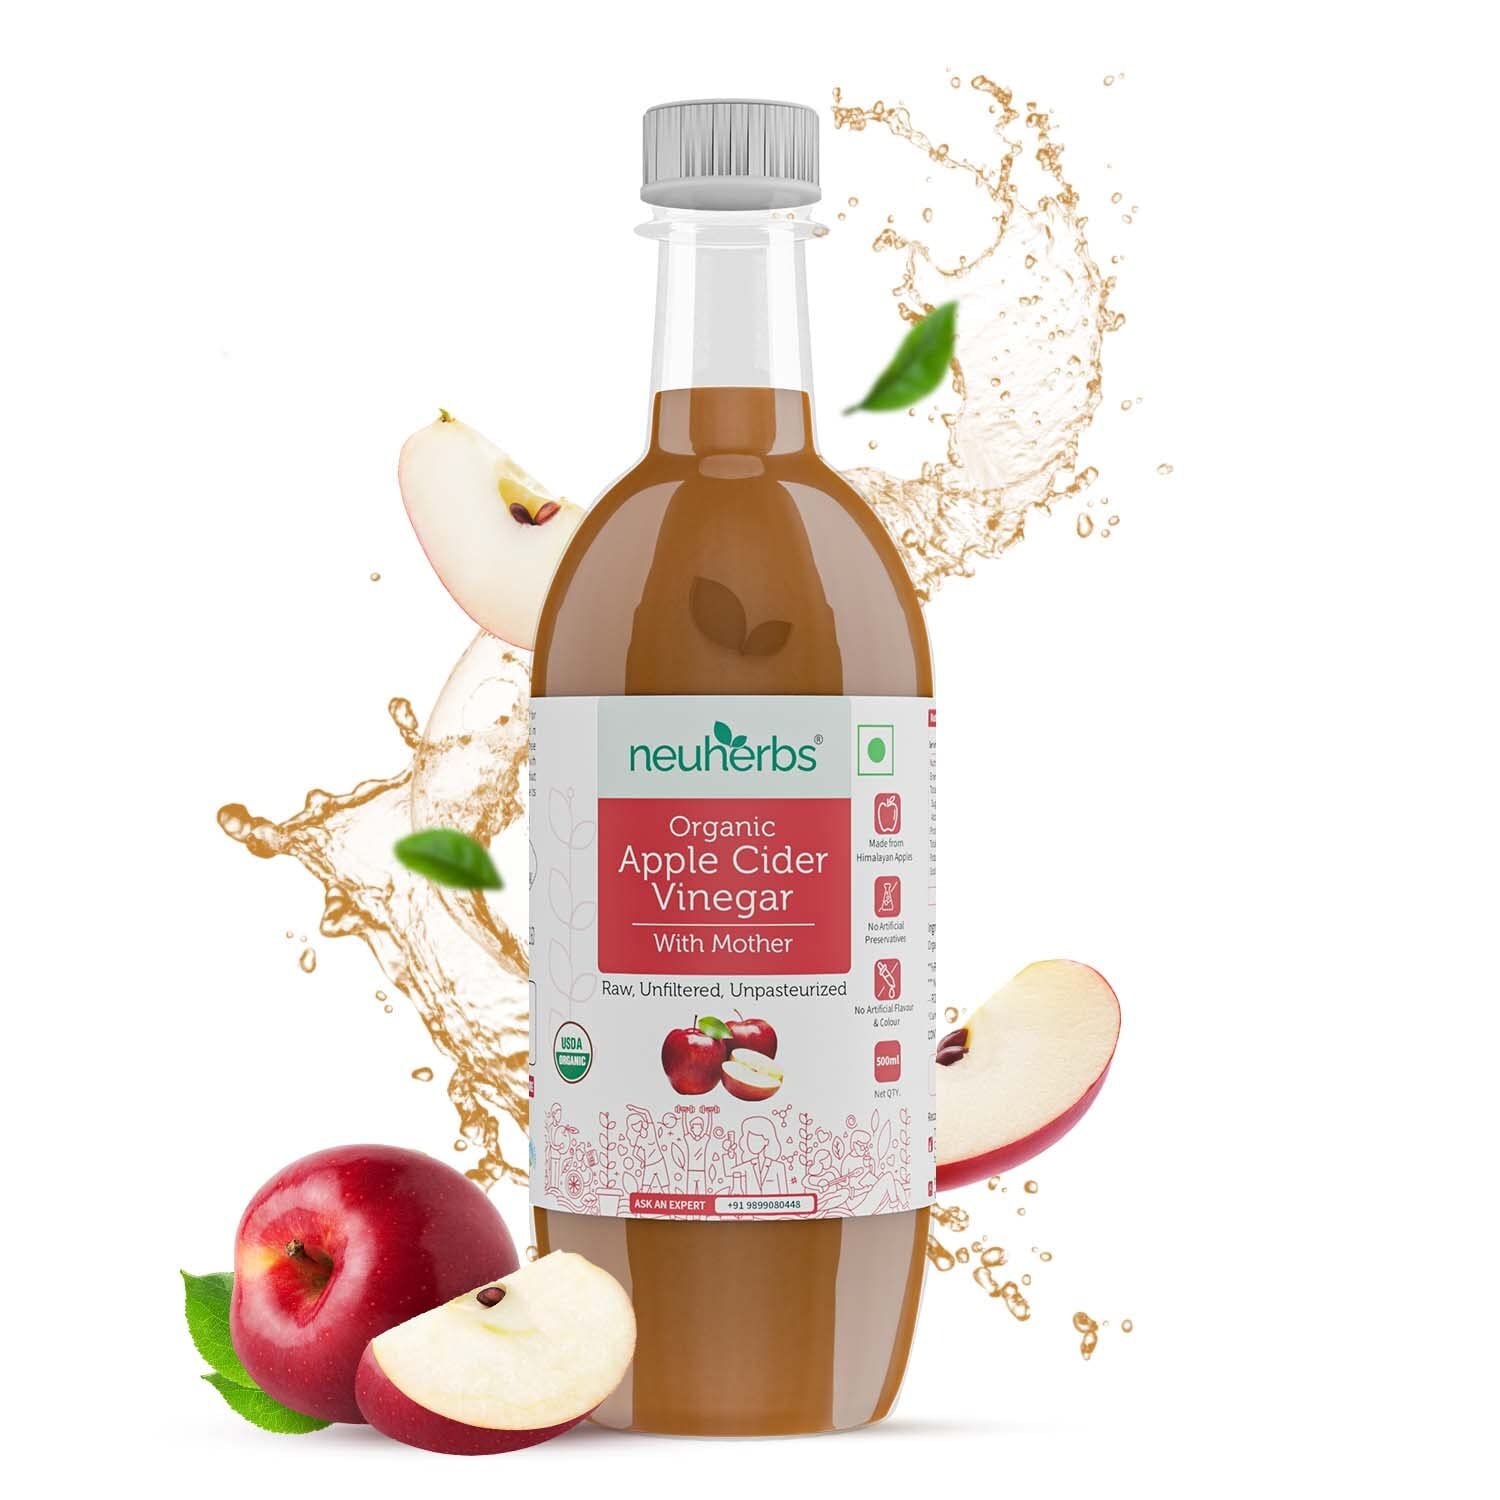 neuherbs Organic Apple Cider Vinegar